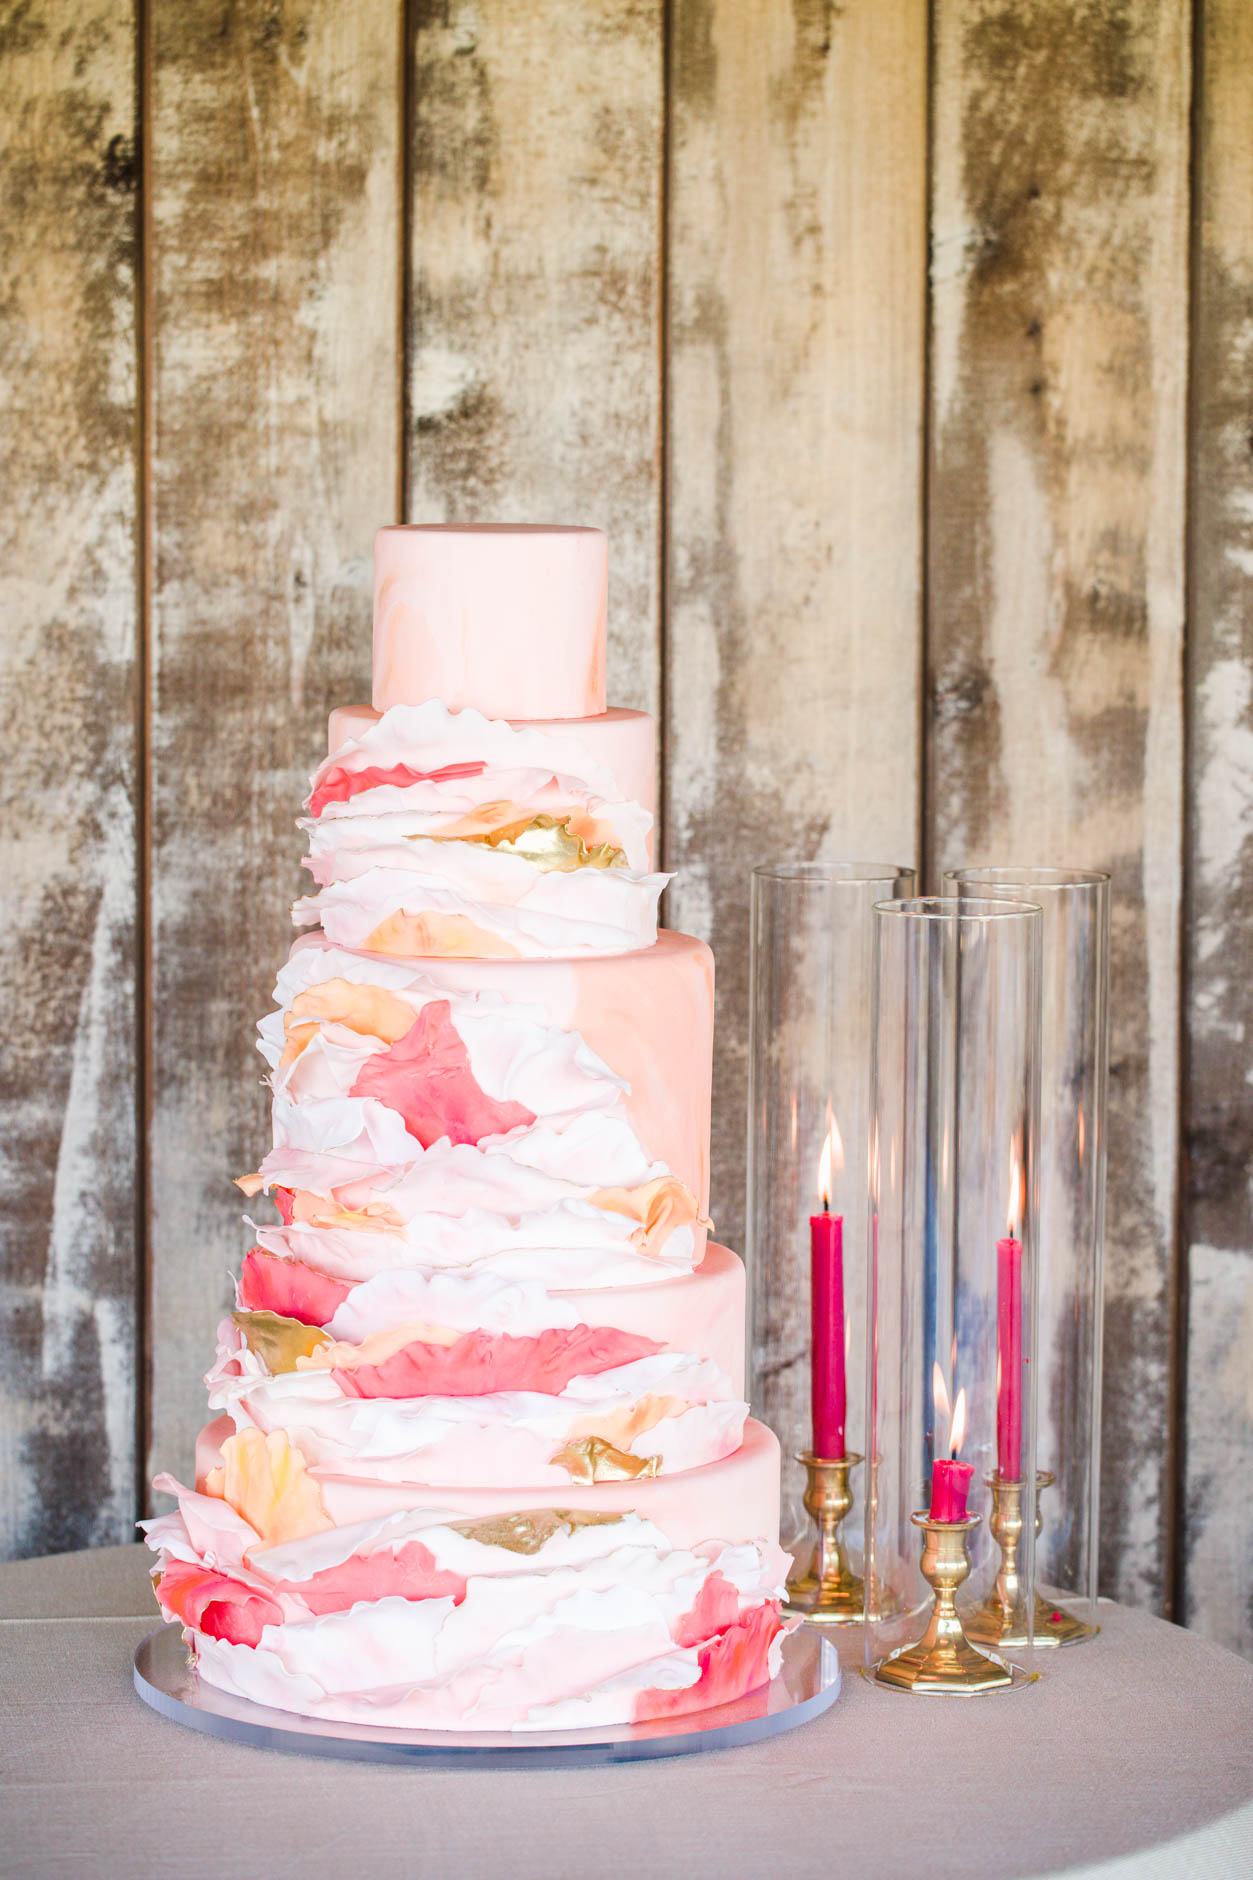 Georgia O'Keefe Inspired Cake with pink, orange and gold ruffles